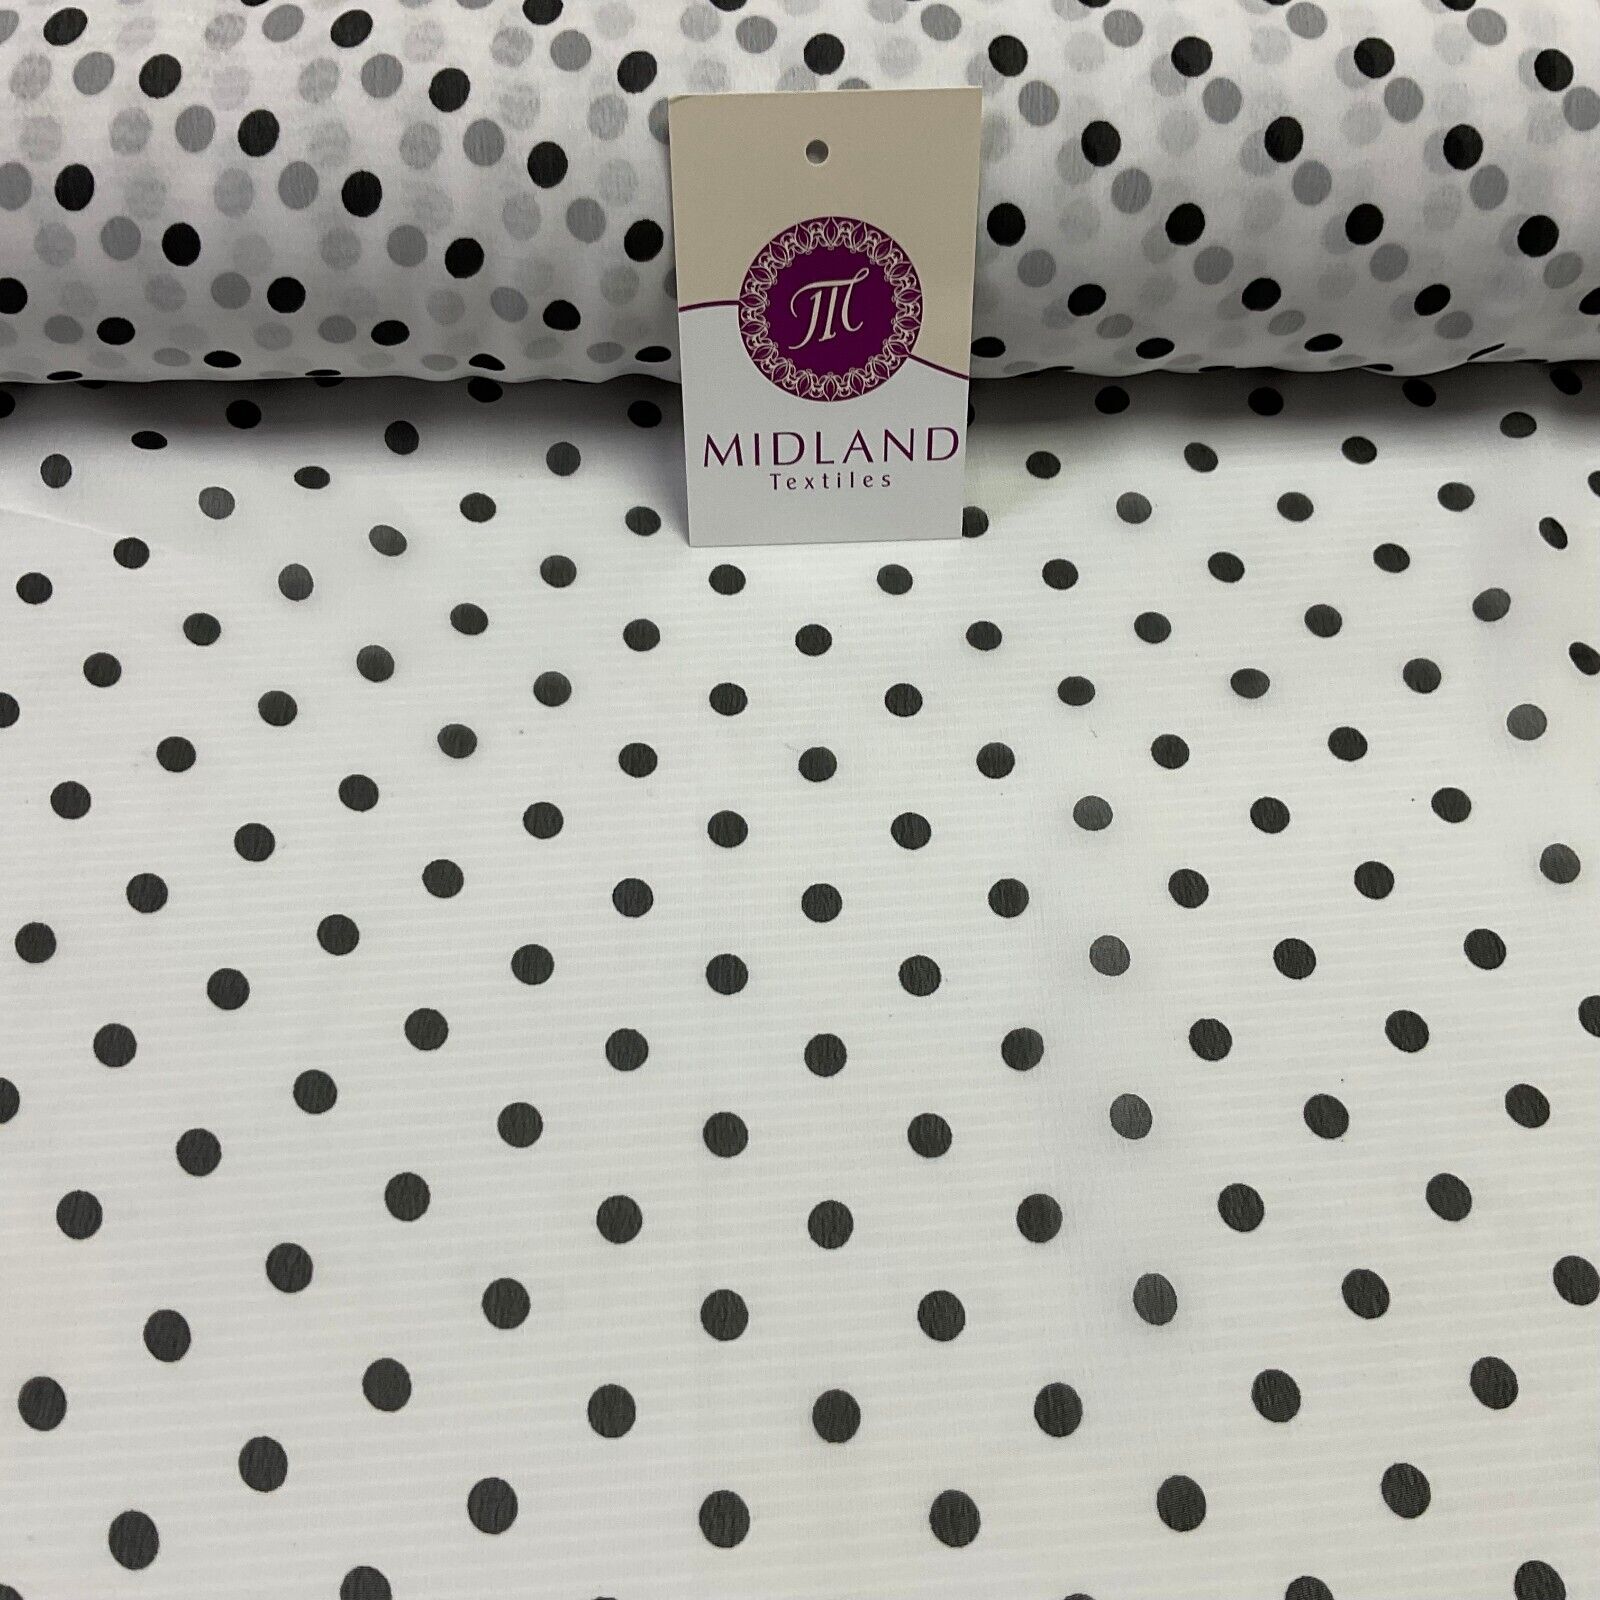 Polka Dot Spot Sheer, Flowy dress blouse chiffon fabric 58 inches wide M1748